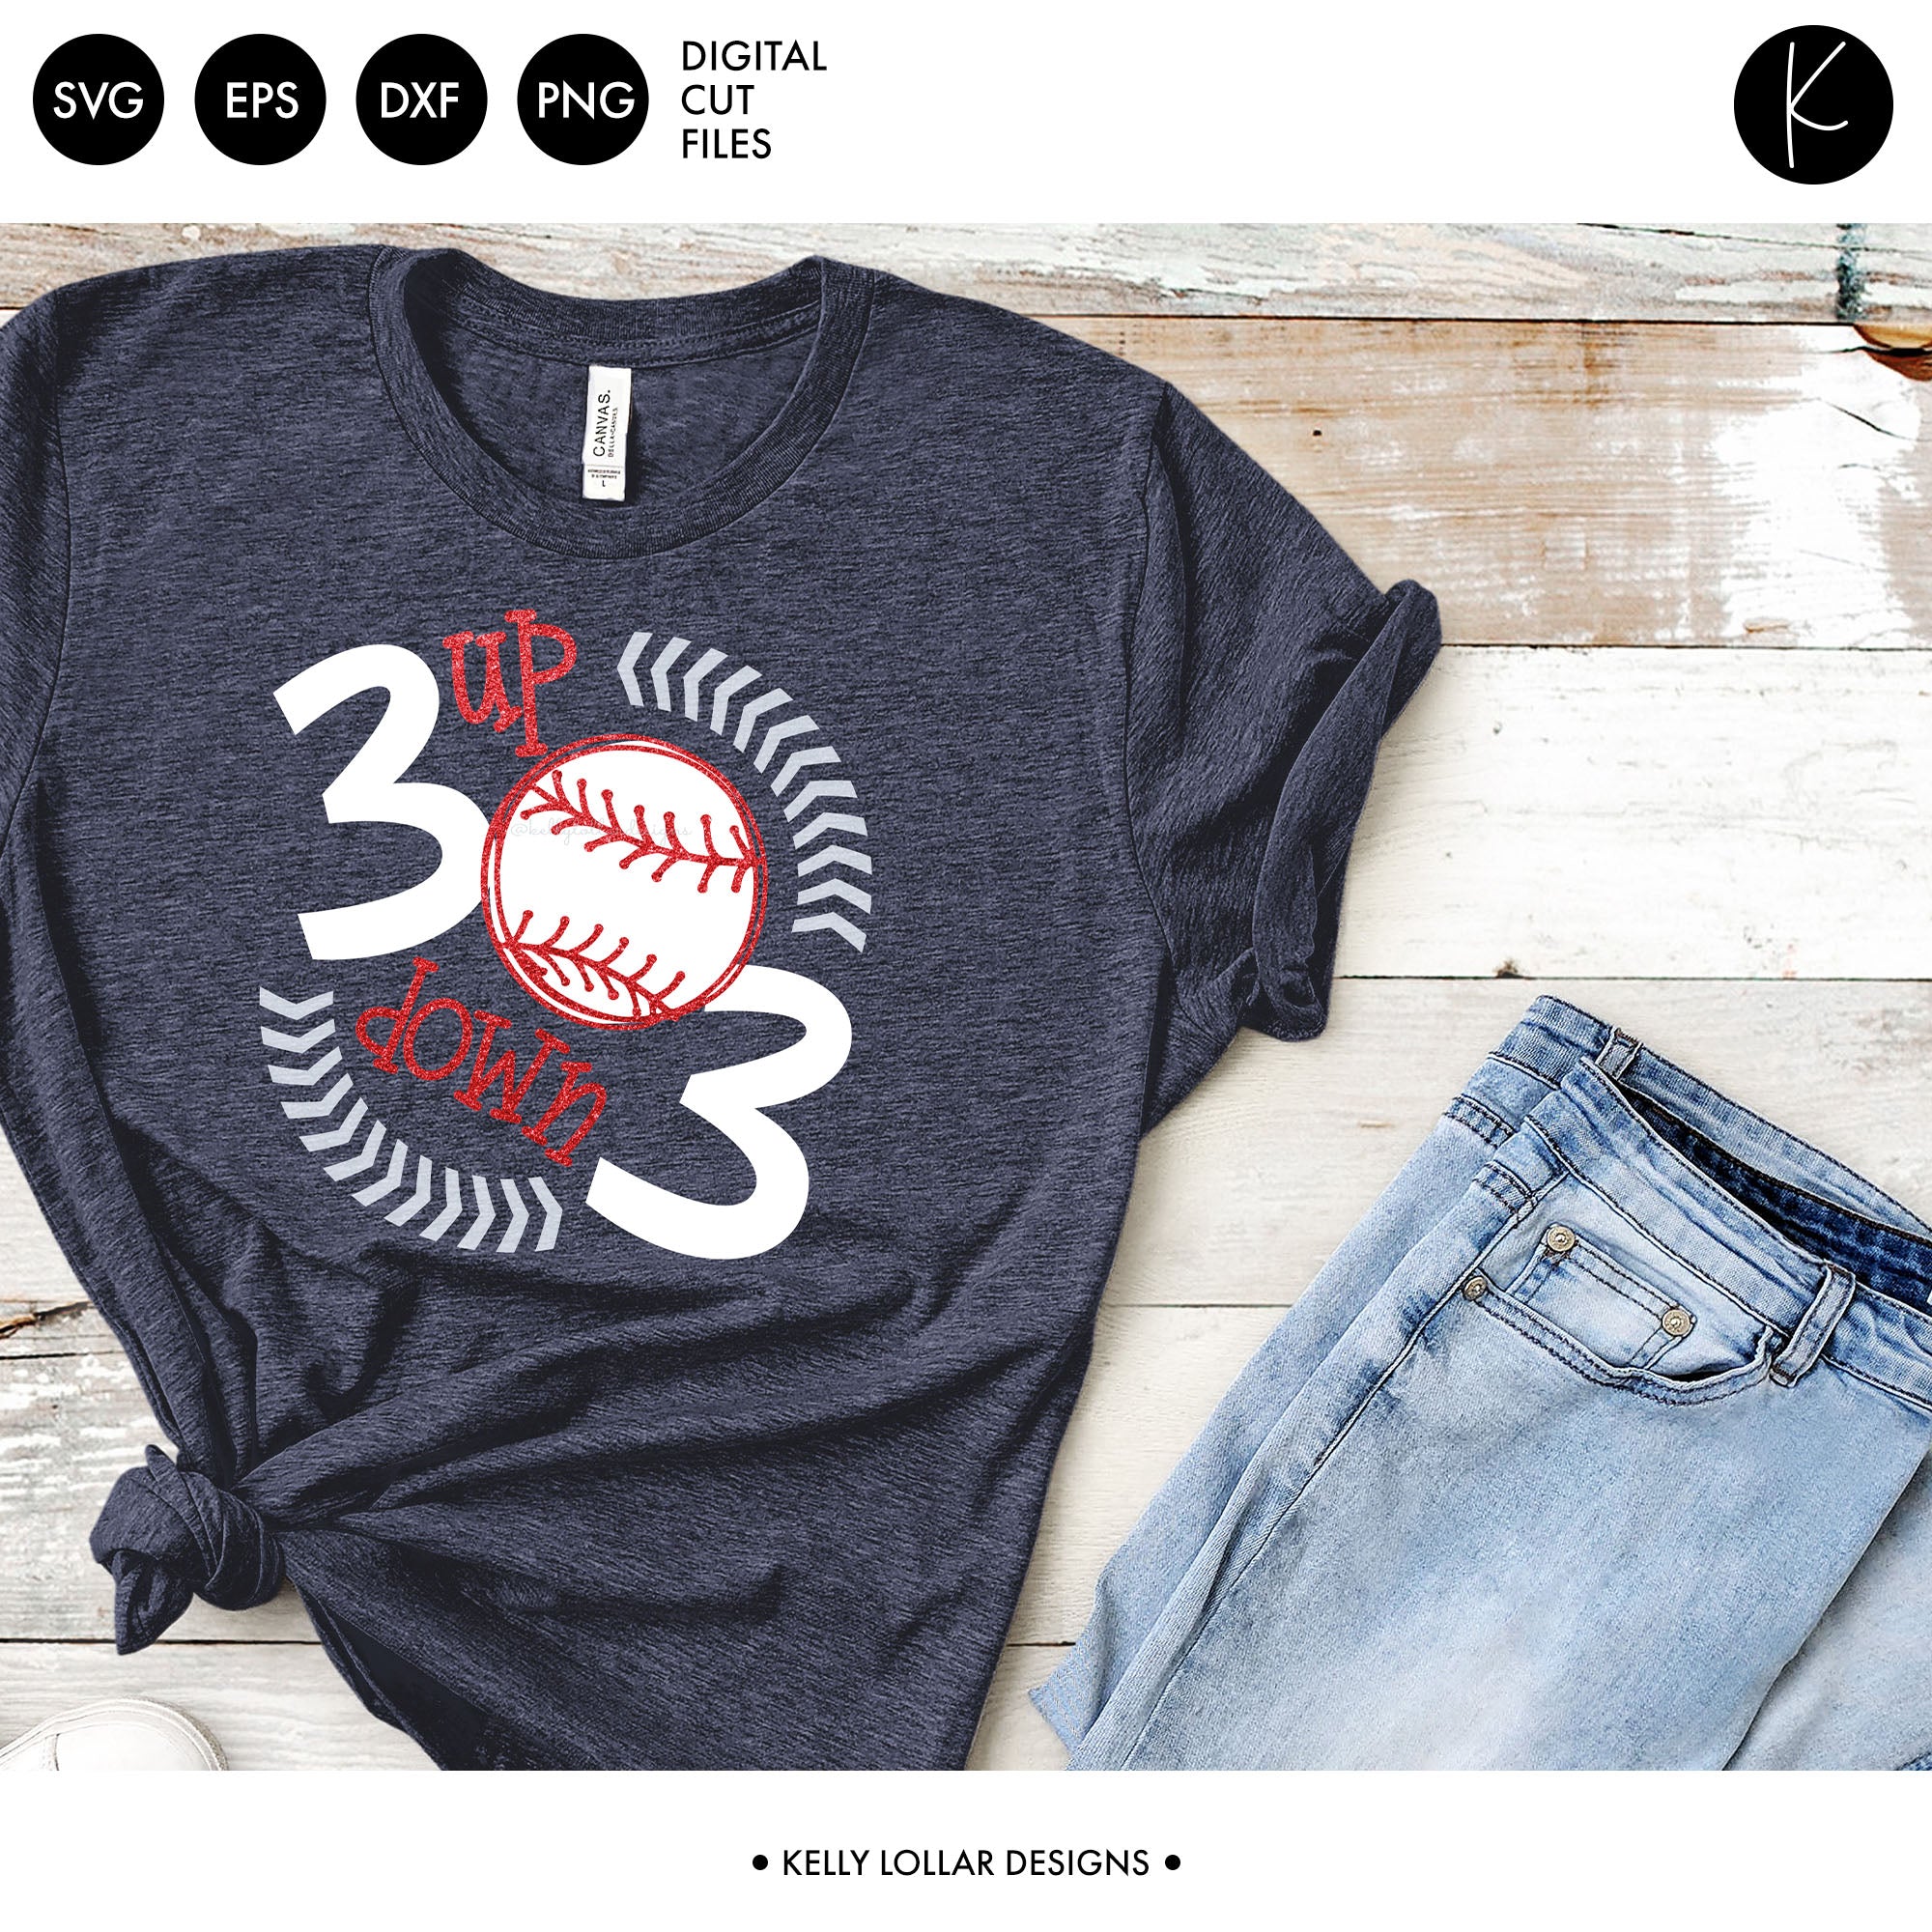 3 Up 3 Down Baseball or Softball Shirt SVG Cut File - Kelly Lollar Designs